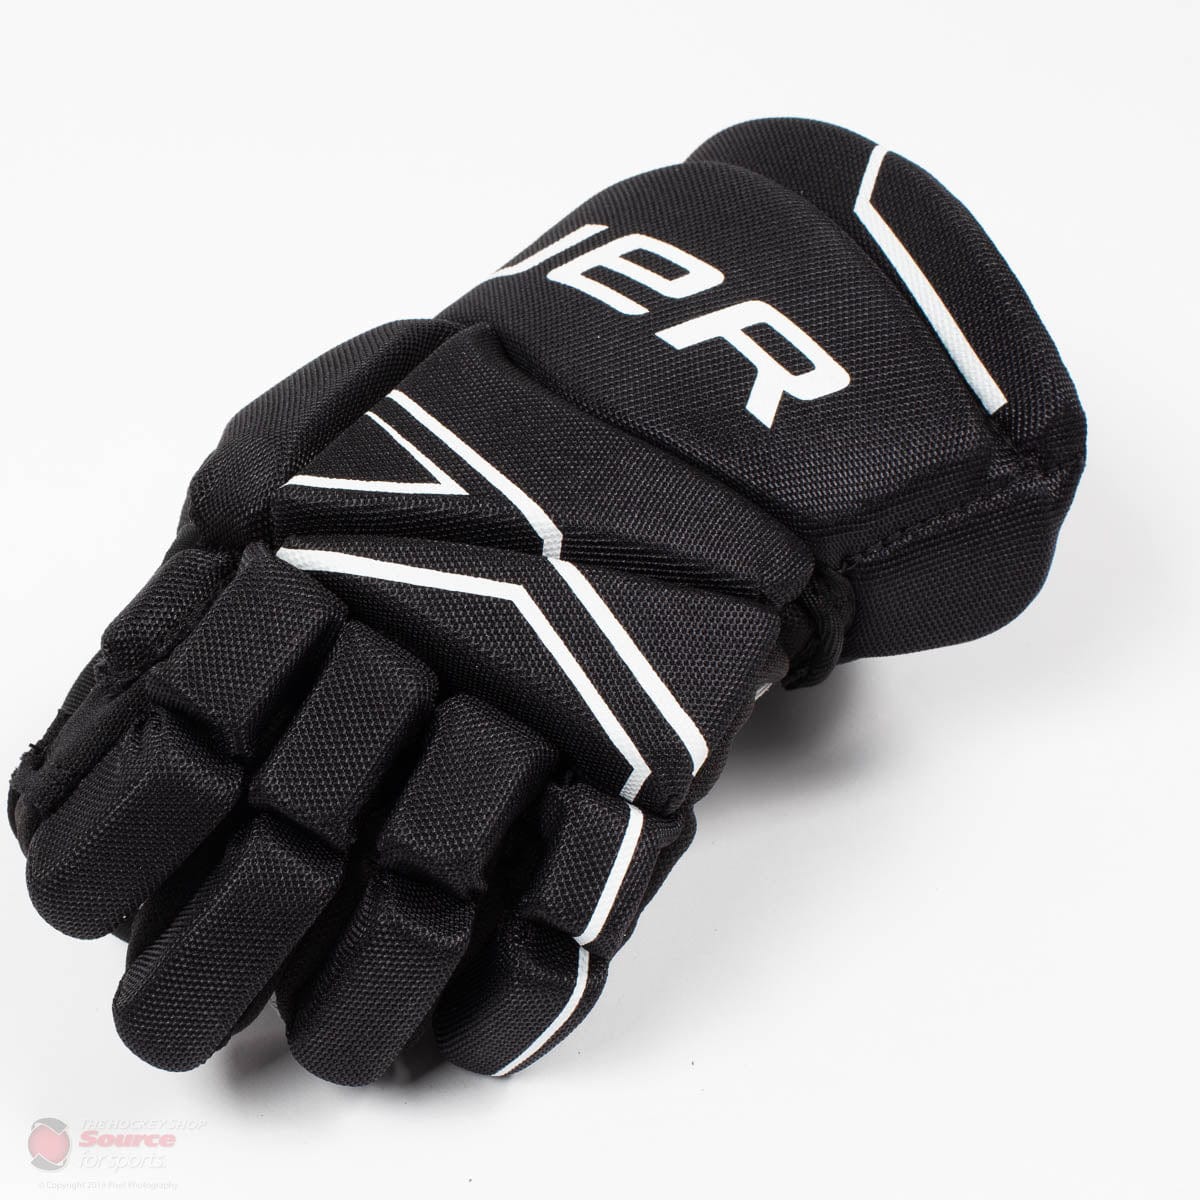 Bauer NSX Youth Hockey Gloves